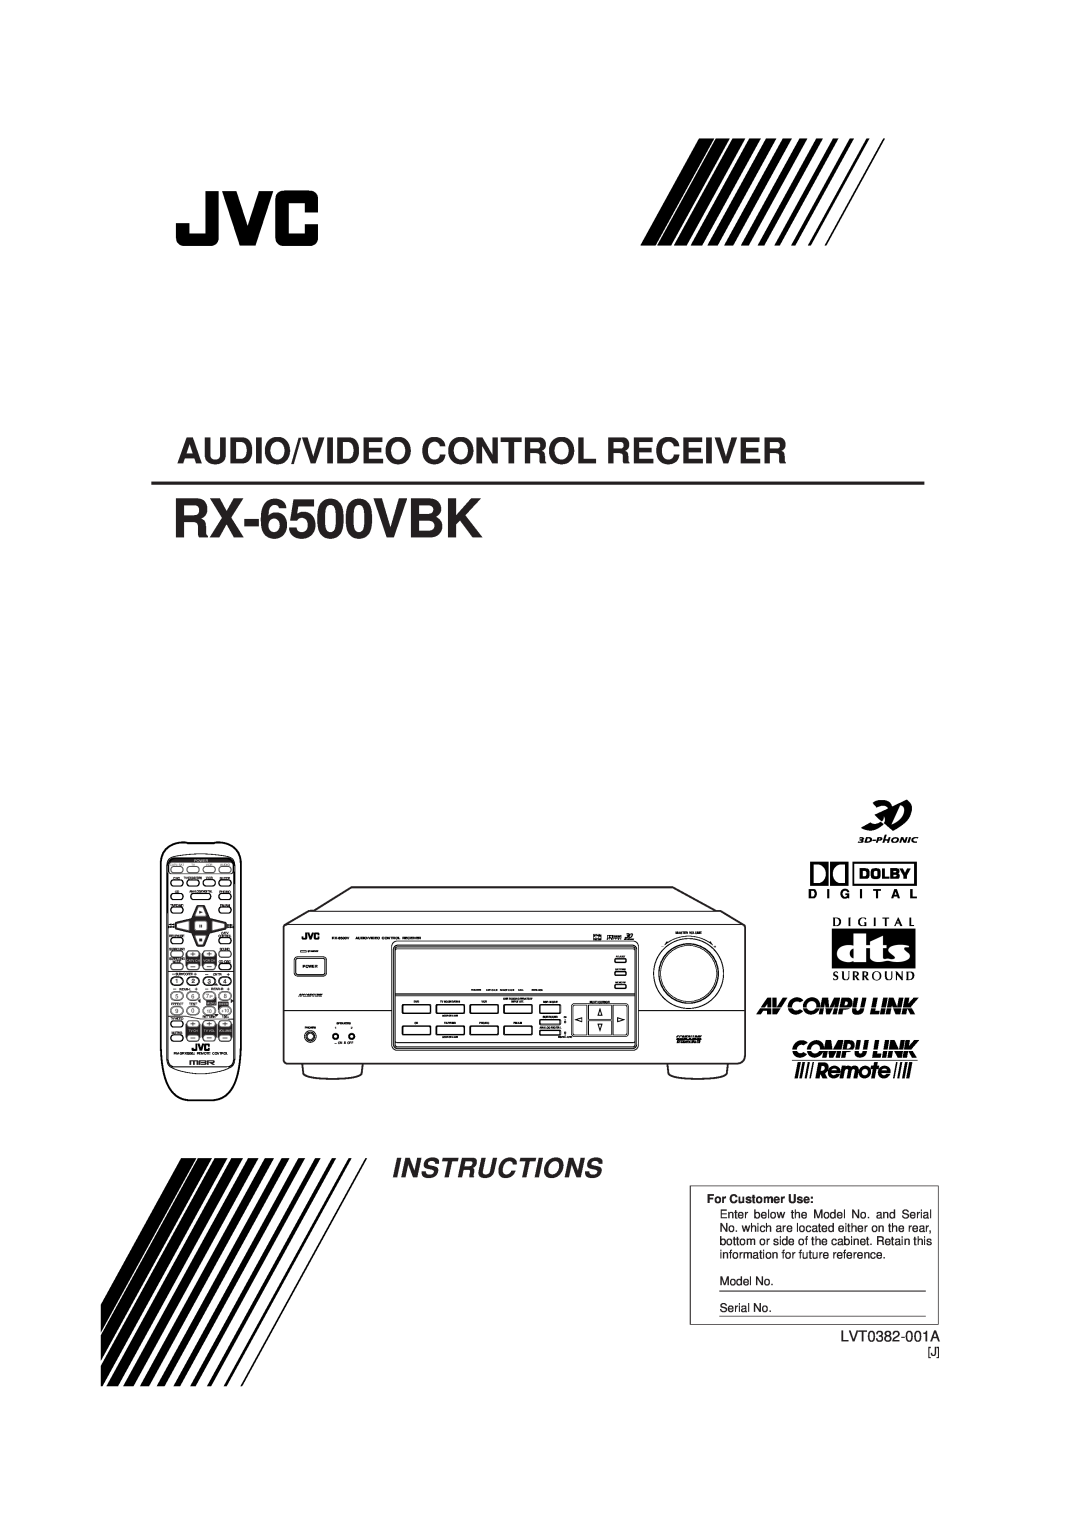 JVC RX-6500VBK manual Audio/Video Control Receiver, Instructions, LVT0382-001A, D I G I T A L, For Customer Use, Power 